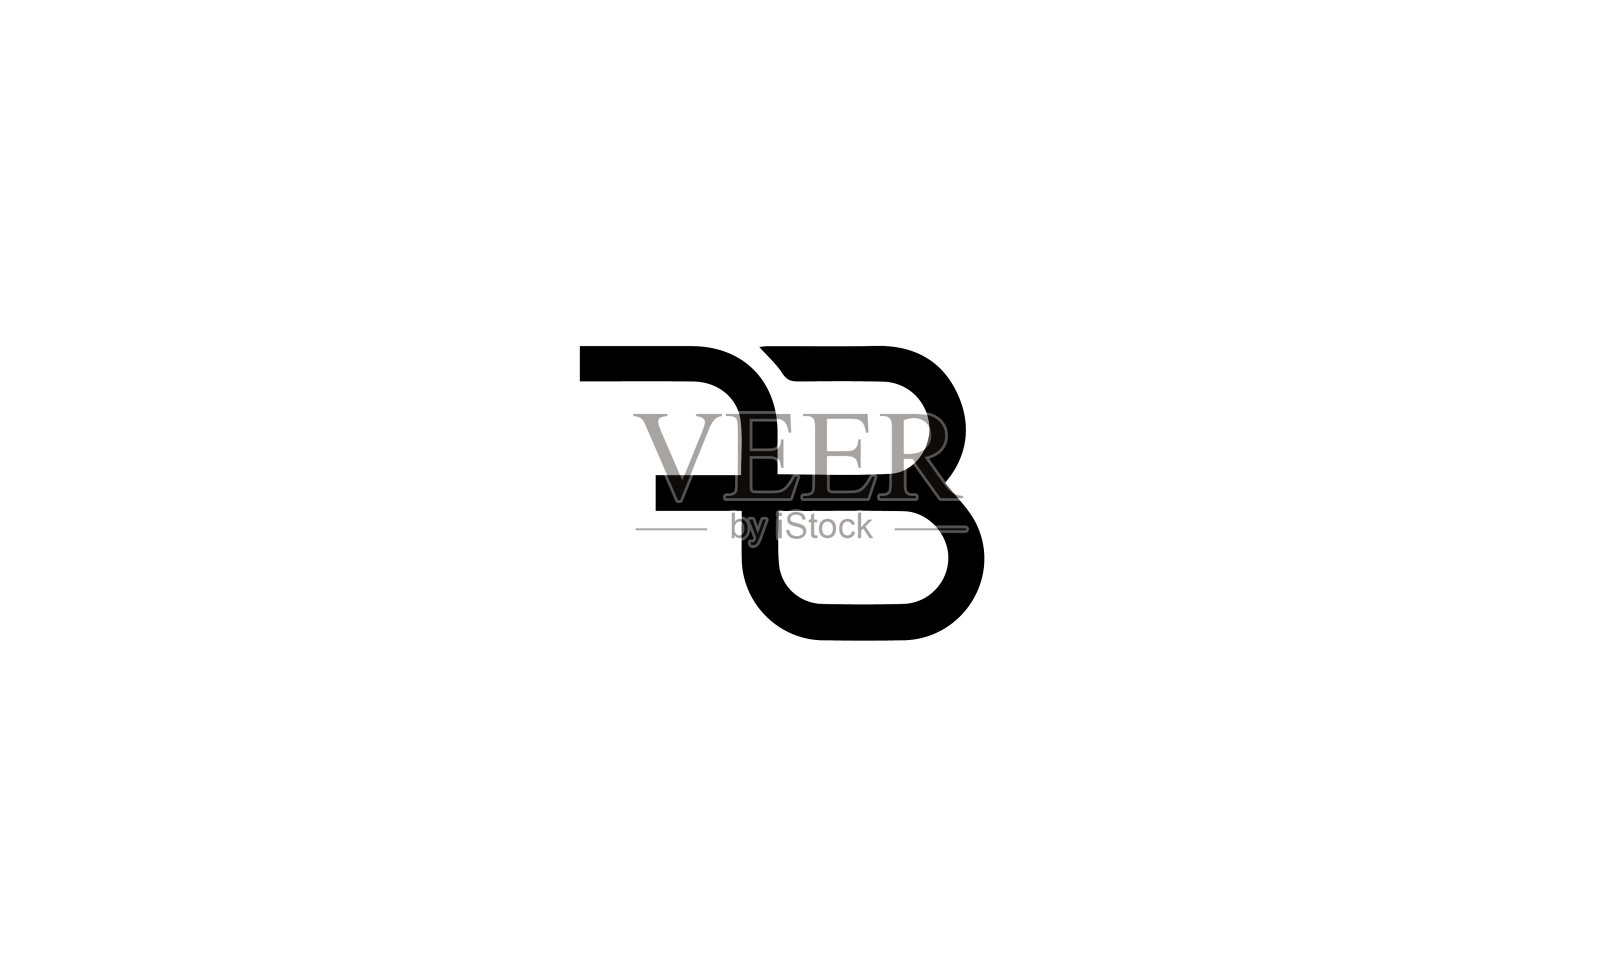 Fb或bf抽象字母矢量标志模板插画图片素材